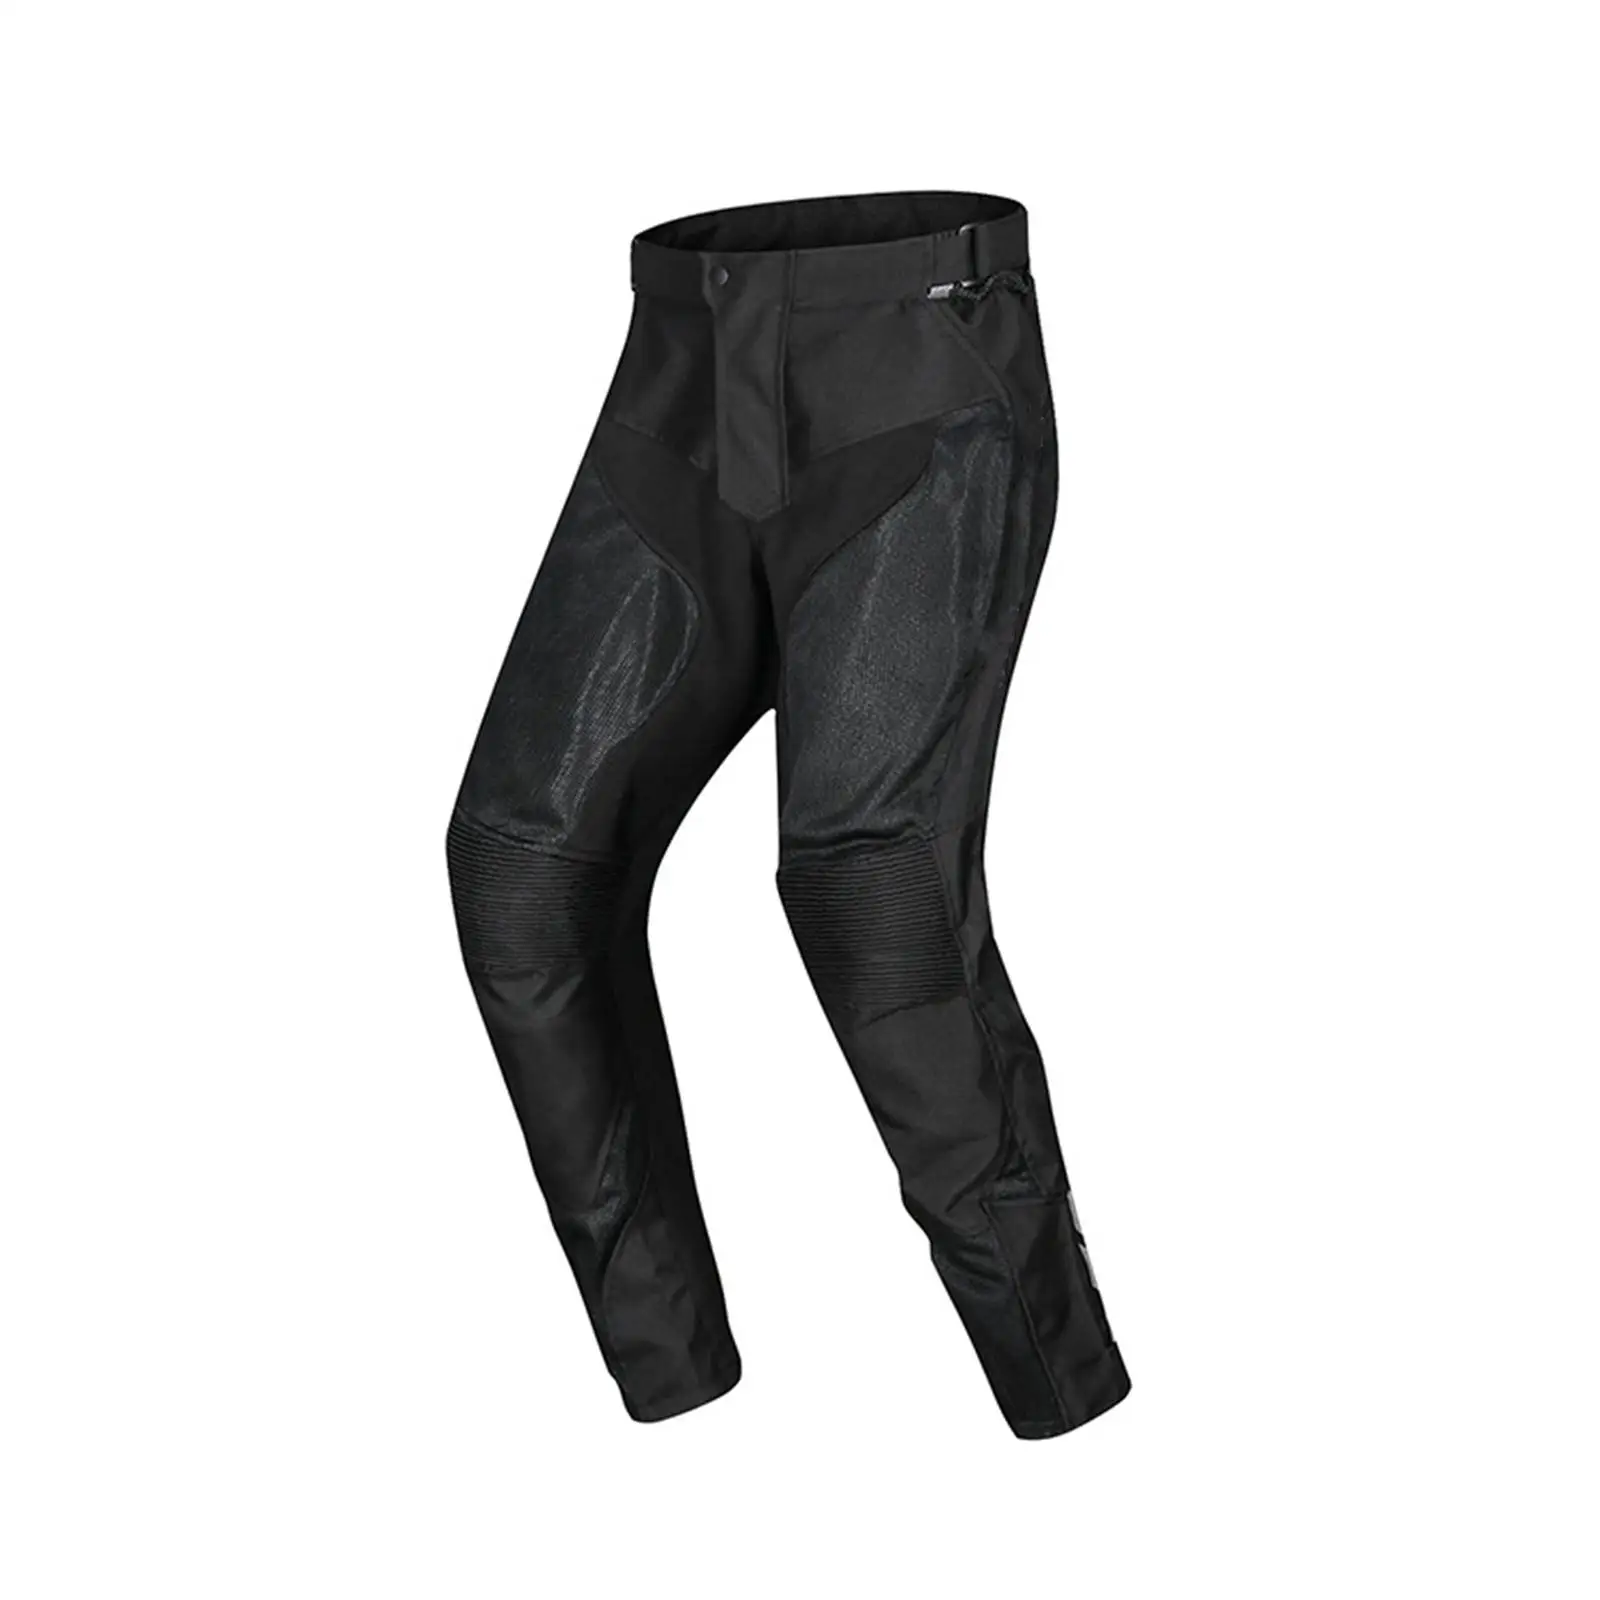 Motorcycle Pants Motorcycle Overpants Waterproof Breathable Mesh Knight Gear All